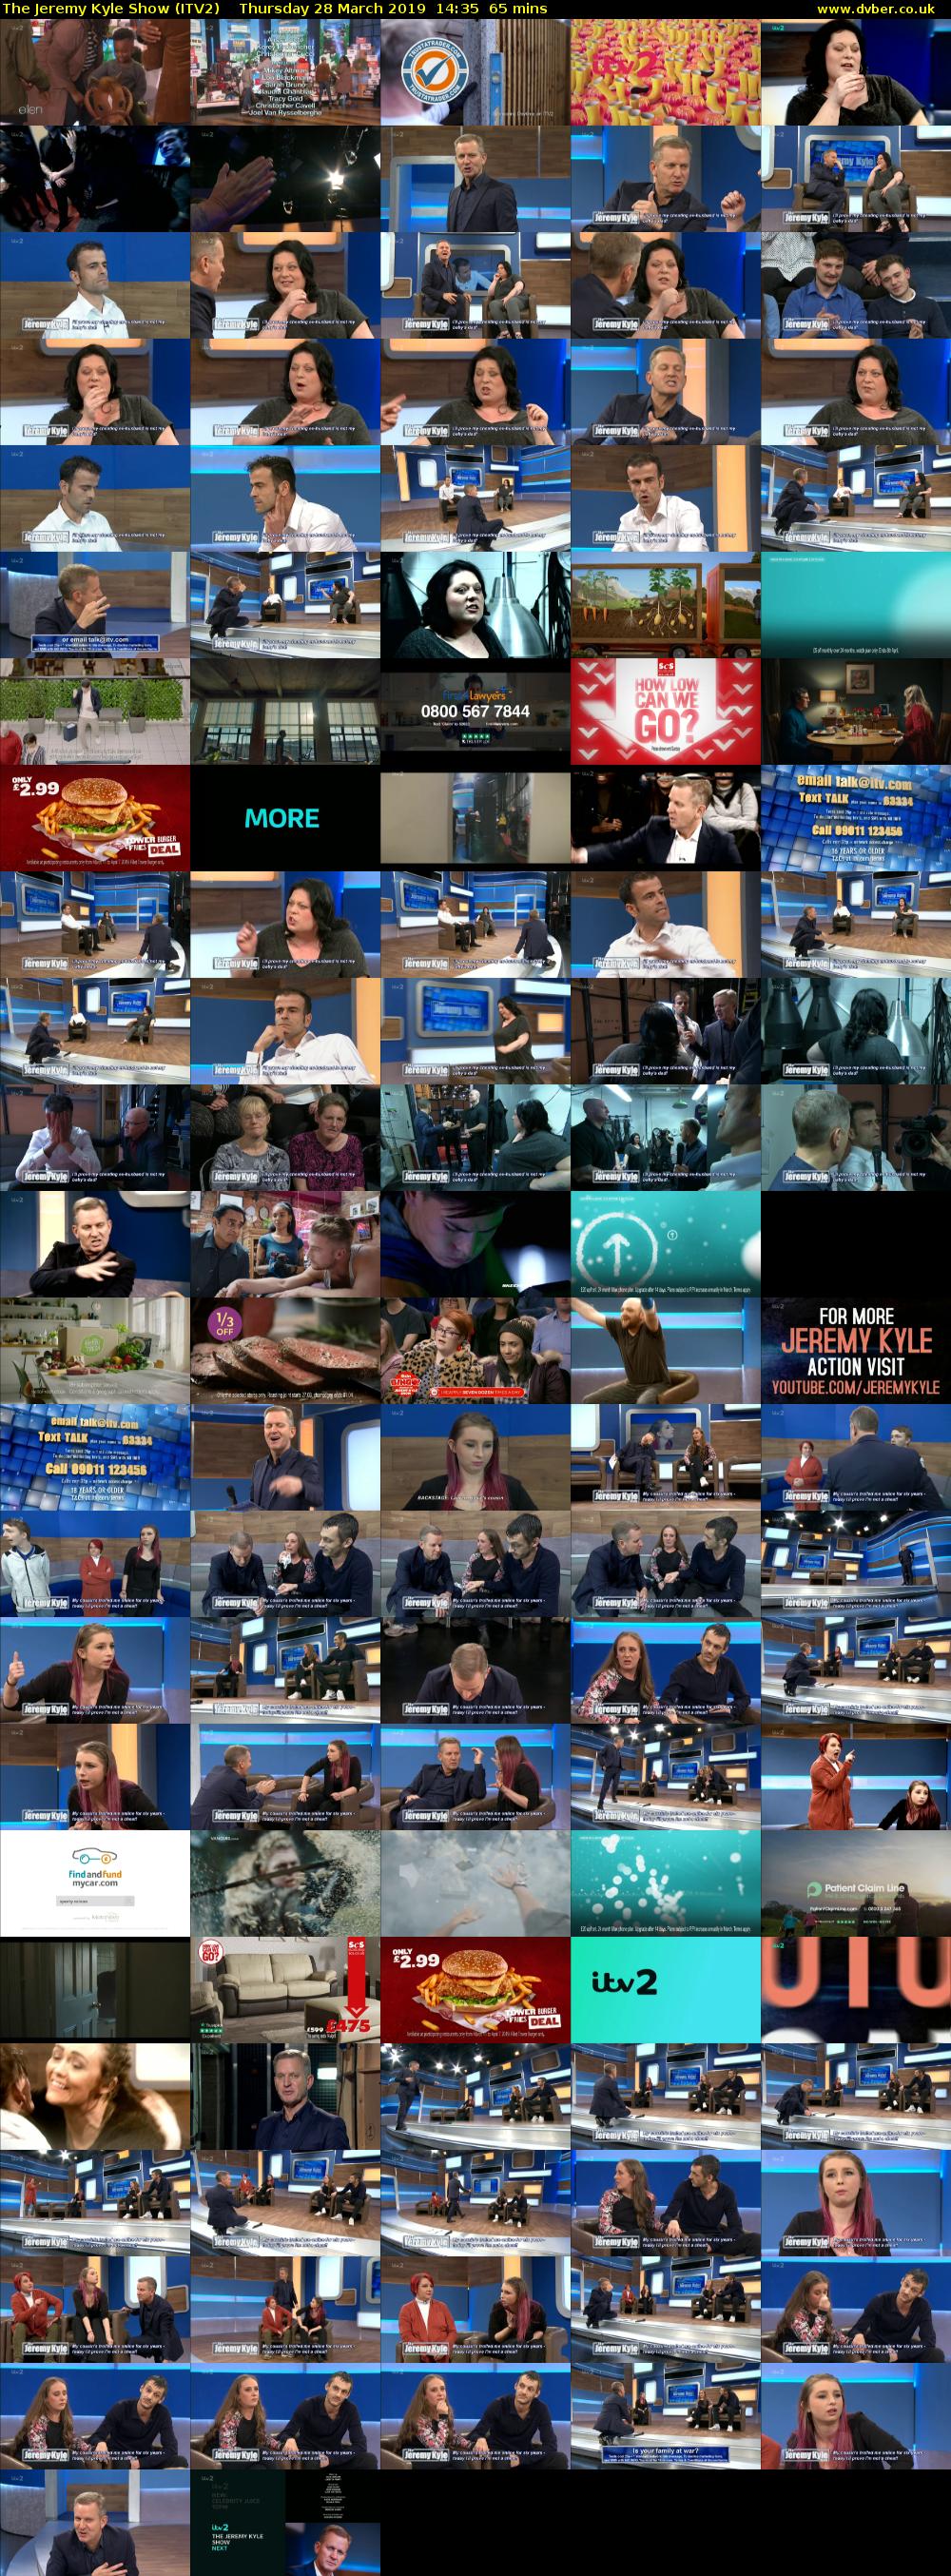 The Jeremy Kyle Show (ITV2) Thursday 28 March 2019 14:35 - 15:40